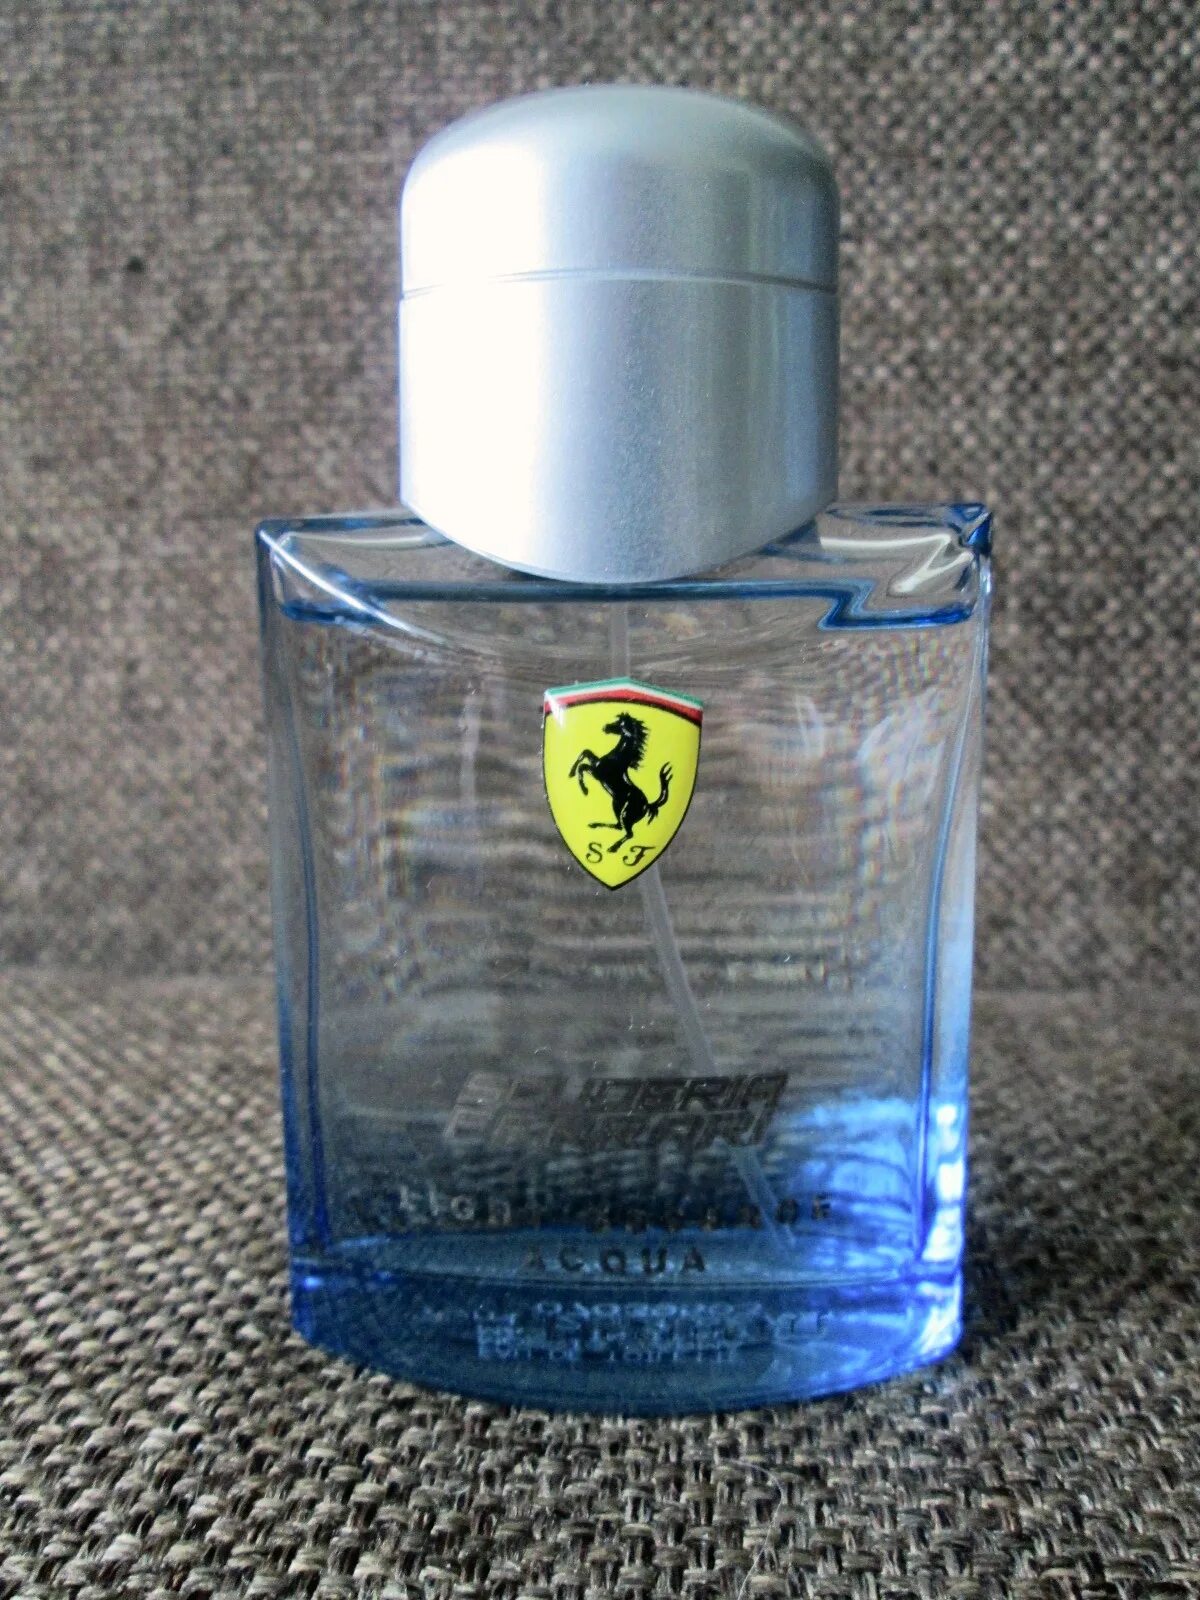 Ferrari Light Essence р. Ferrari Light Essence наливная парфюмерия. Light essence